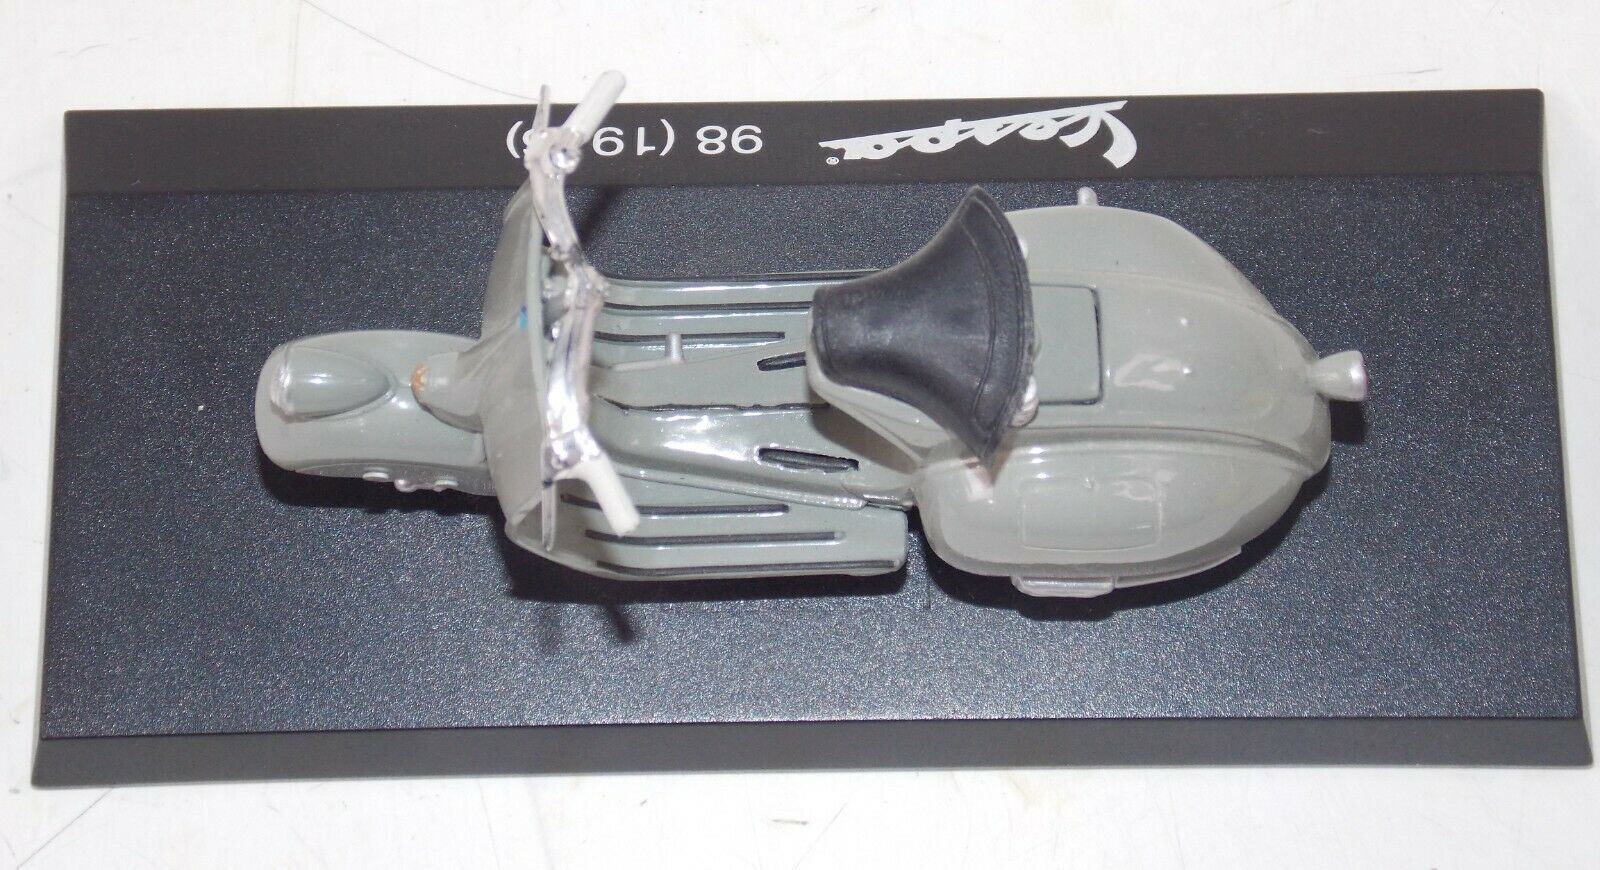 1946 VESPA 98 GREY PIAGGIO VINTAGE SCOOTER L=4" 100mm SCALE 1:18 MODEL DIE CAST - MotoRaider